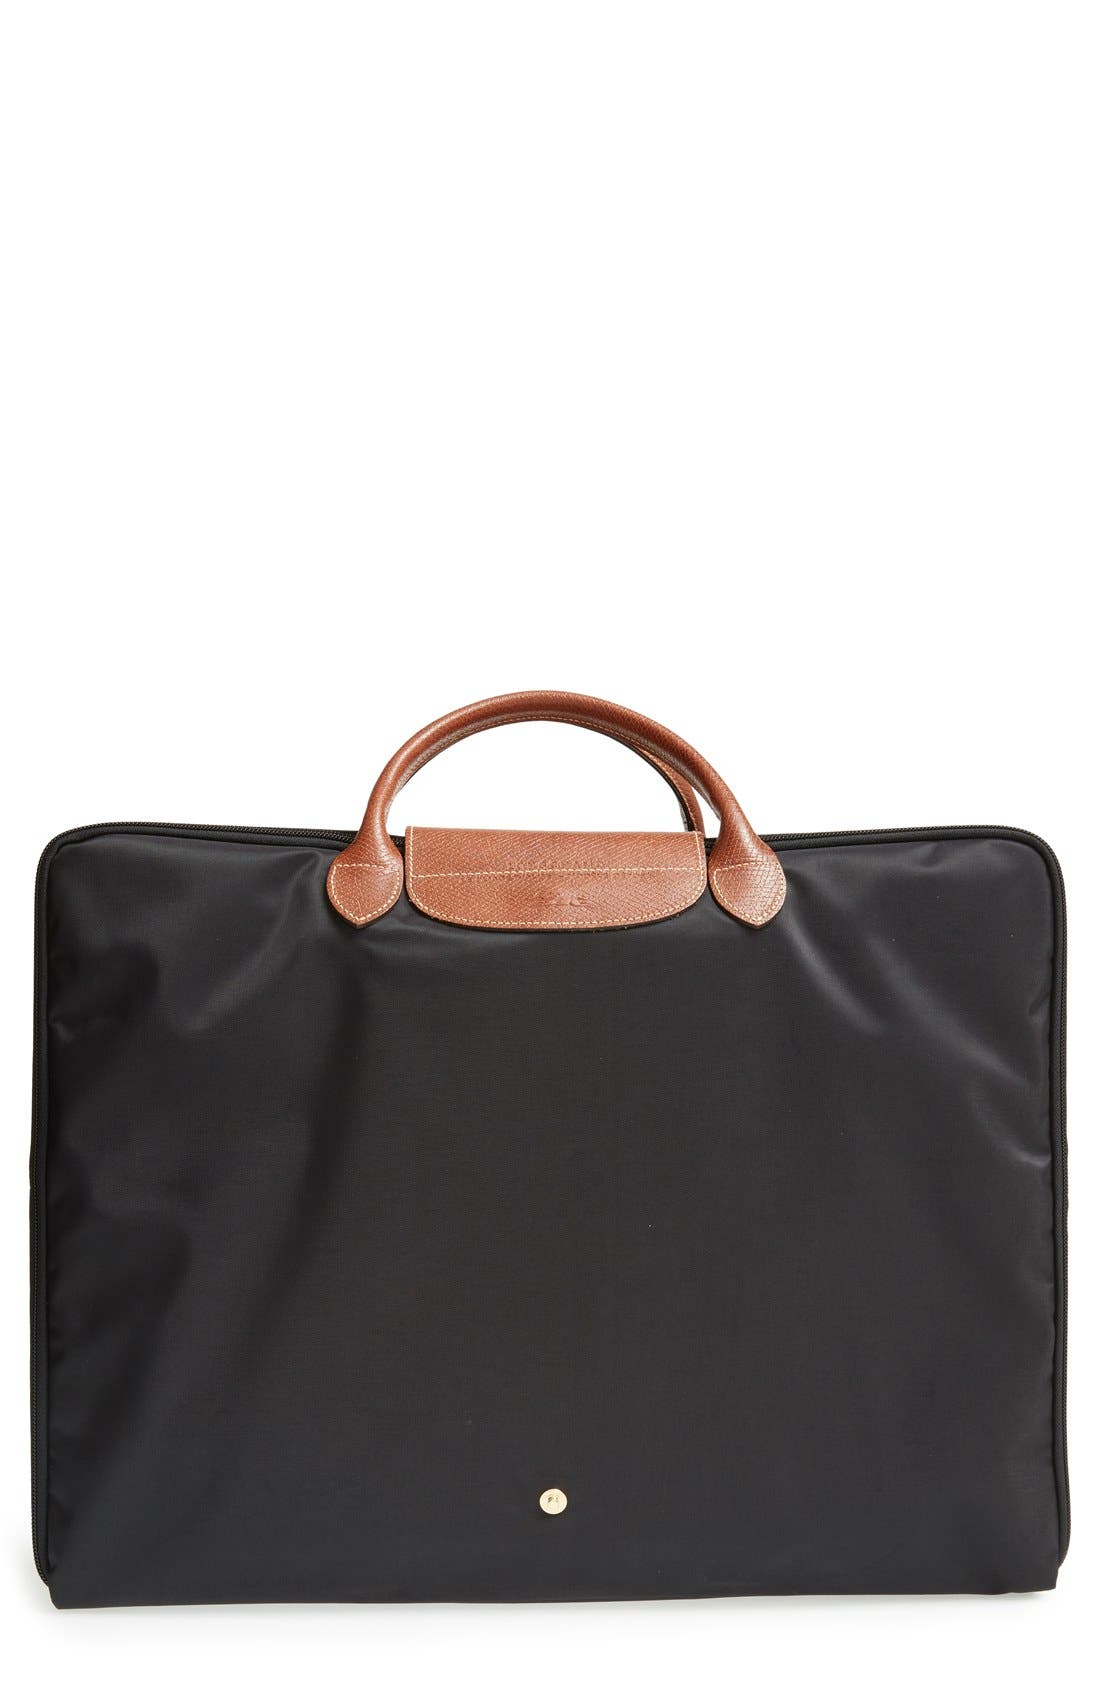 Longchamp 'Le Pliage' Duffel Bag 